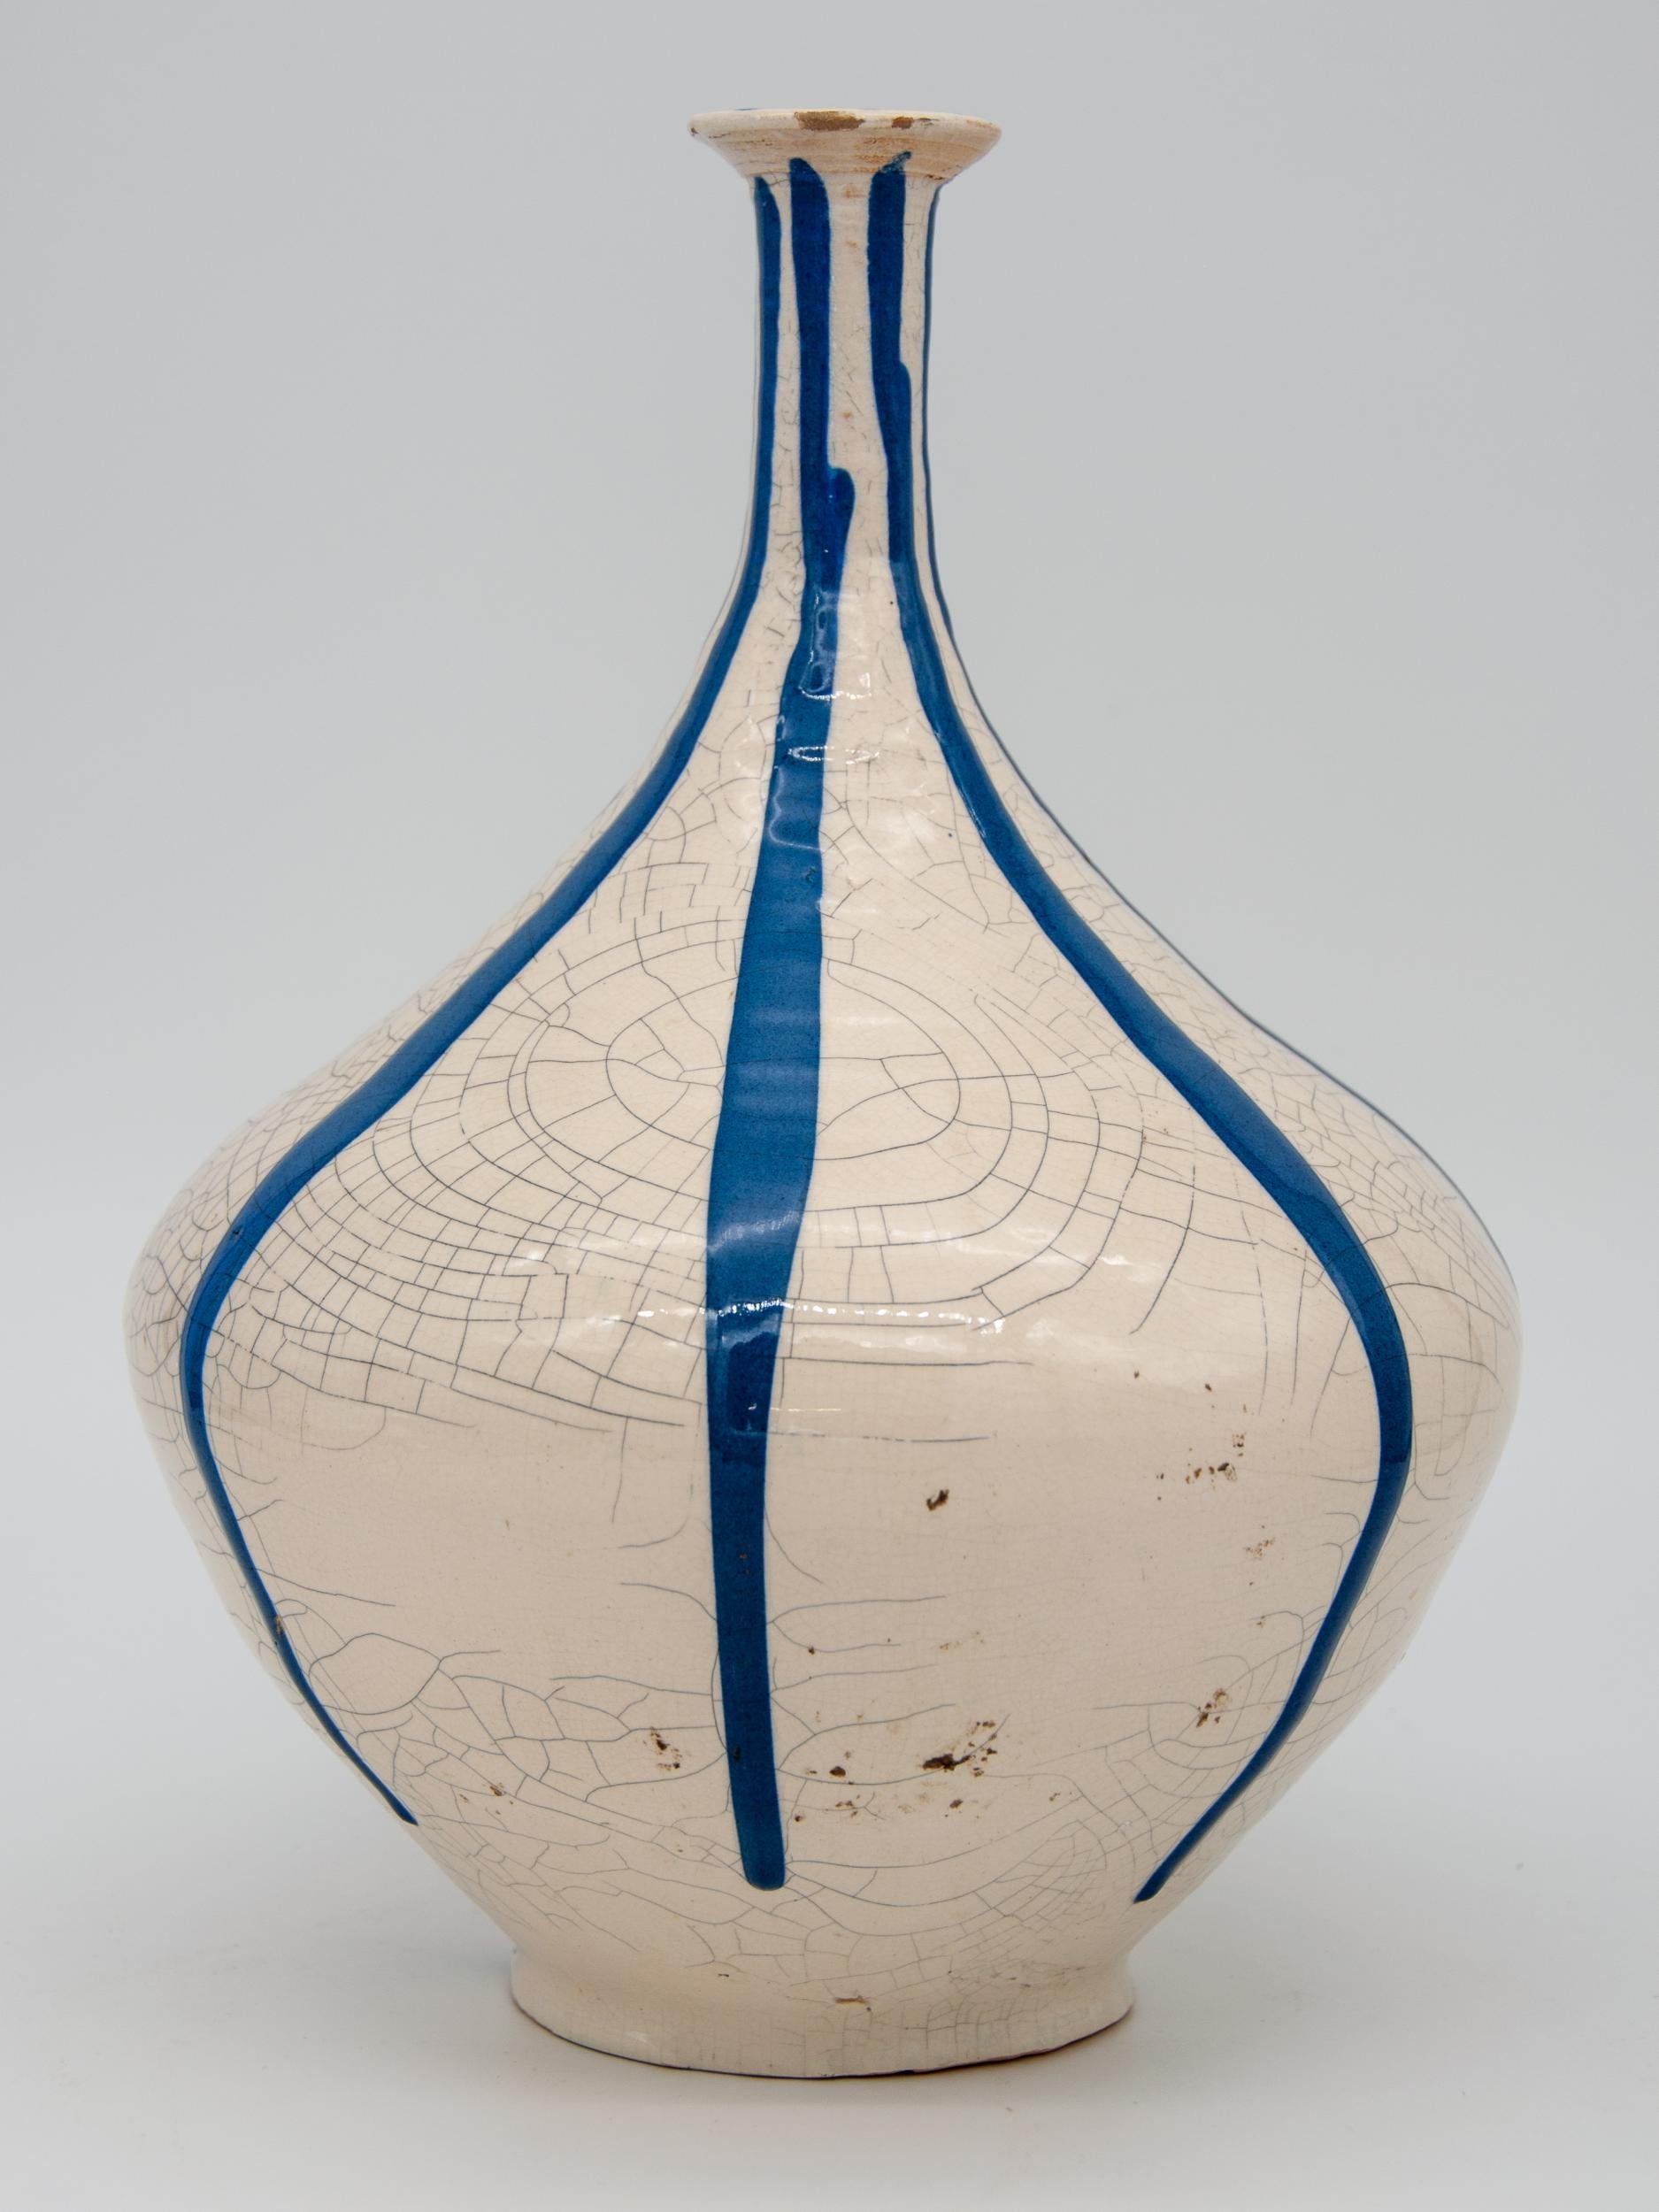 Blue and white stripe pottery vase with crazed finish.